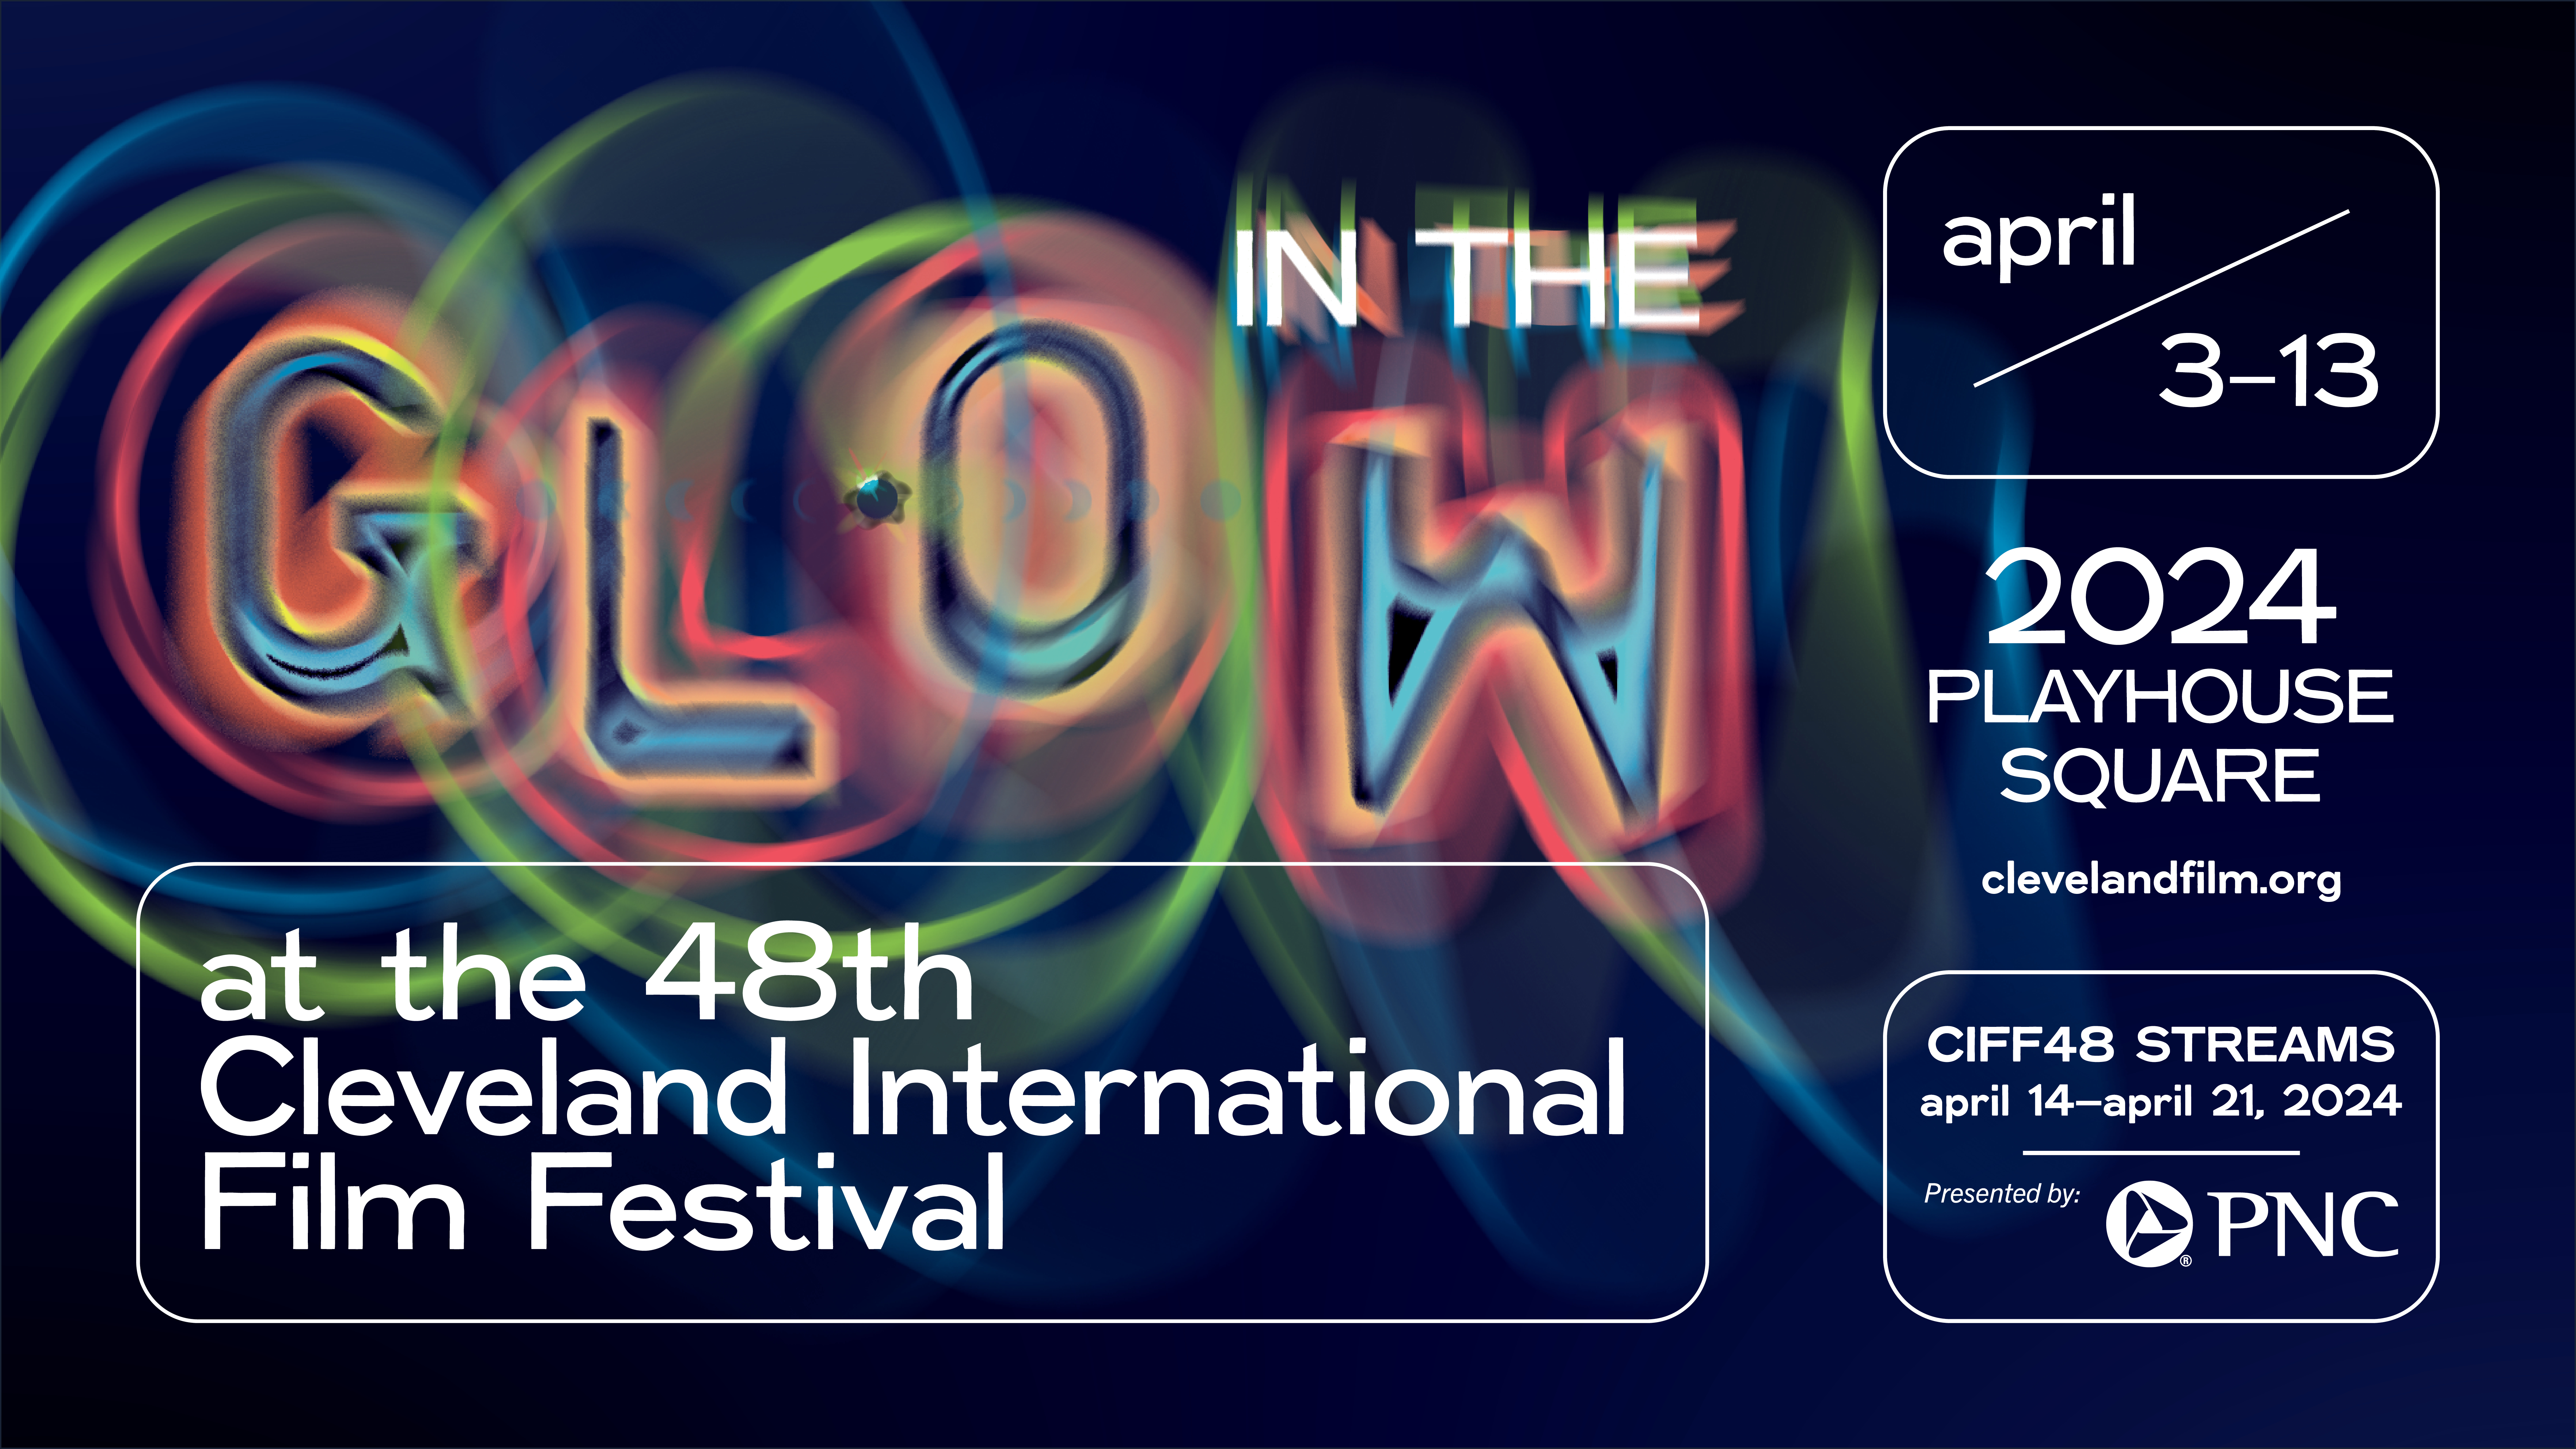  April 3-13, 2024: Cleveland International Film Festival